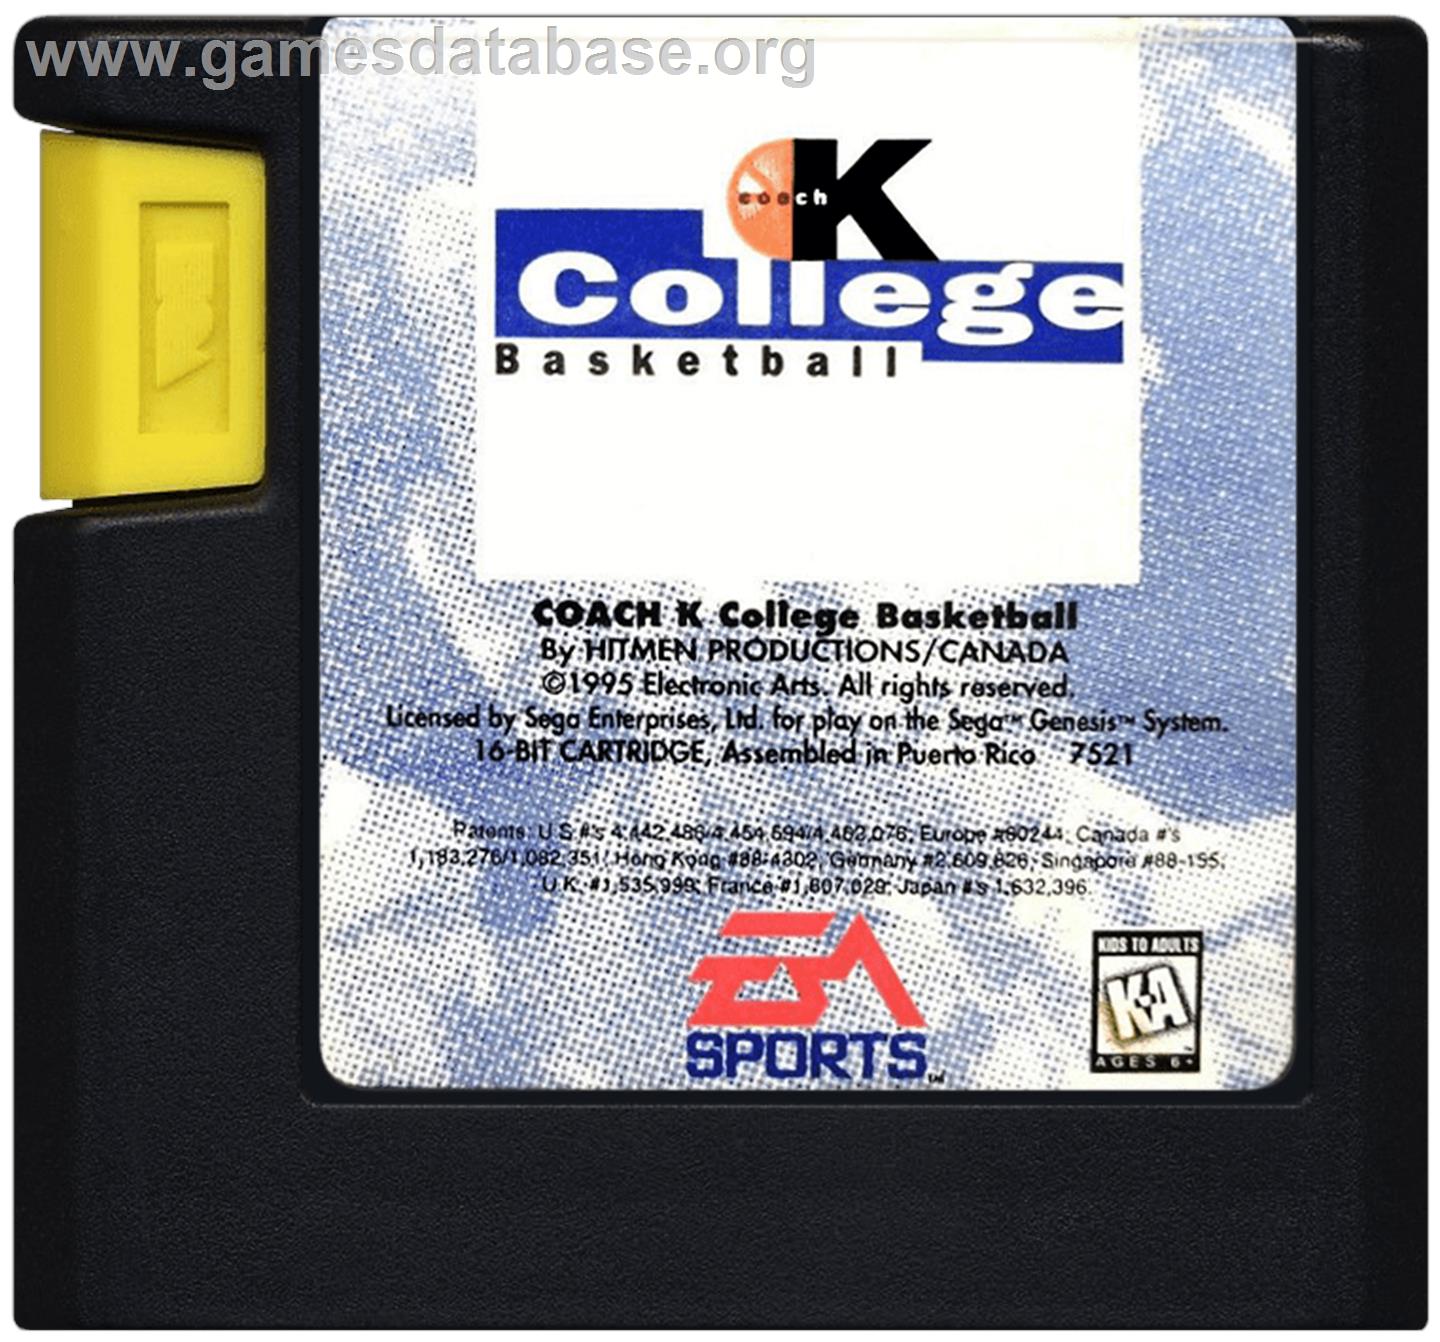 Coach K College Basketball - Sega Genesis - Artwork - Cartridge